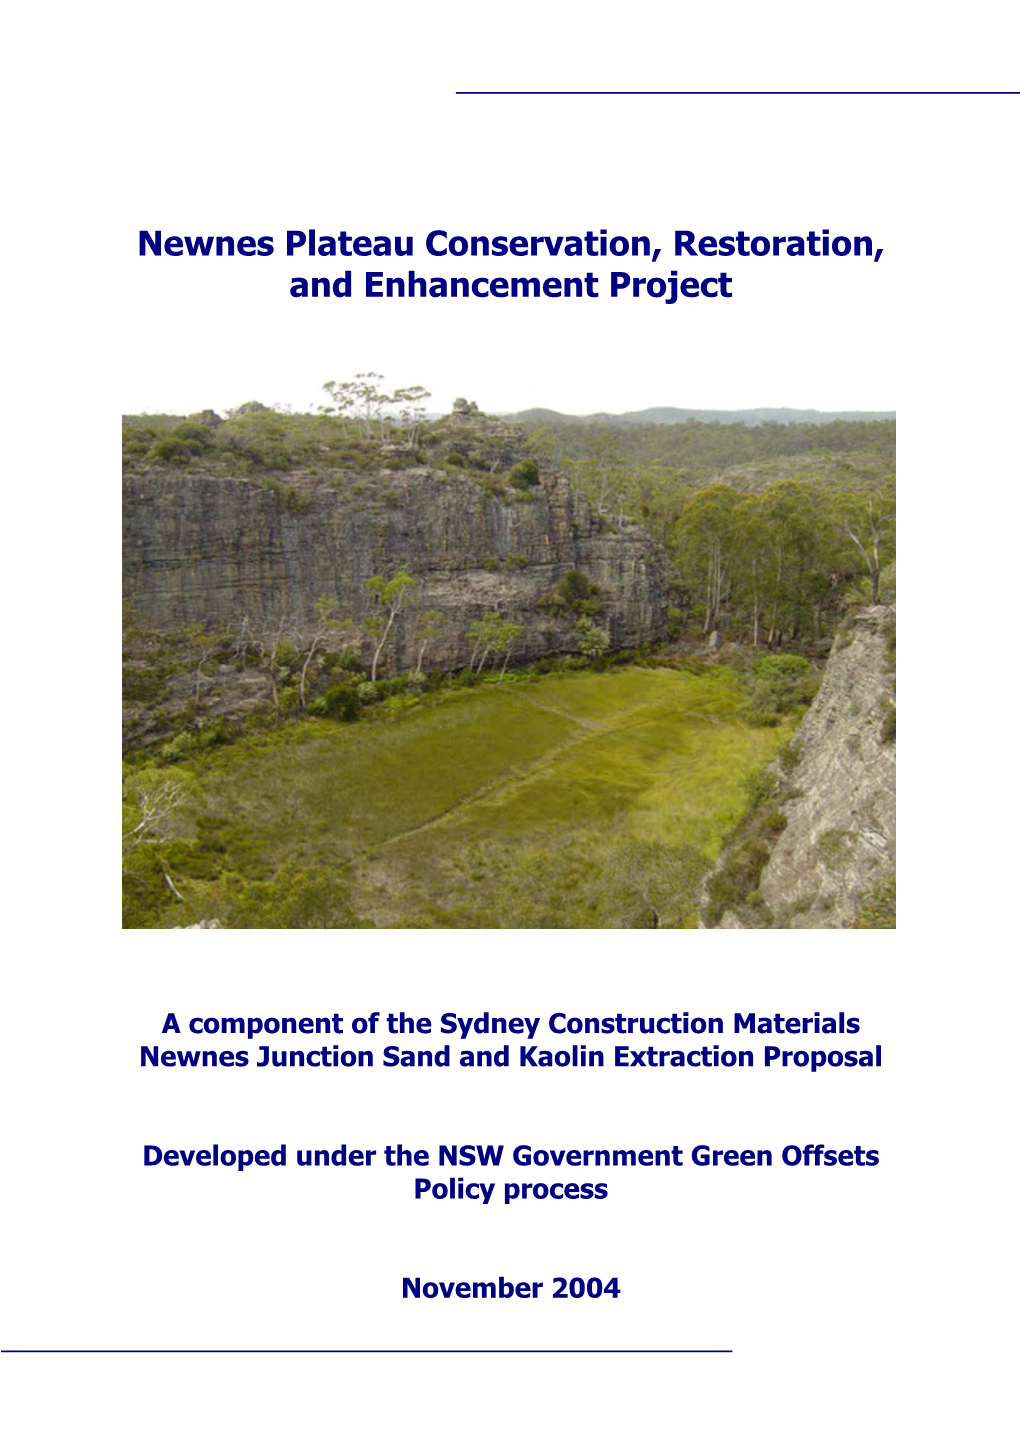 Newnes Plateau Conservation, Restoration, and Enhancement Project